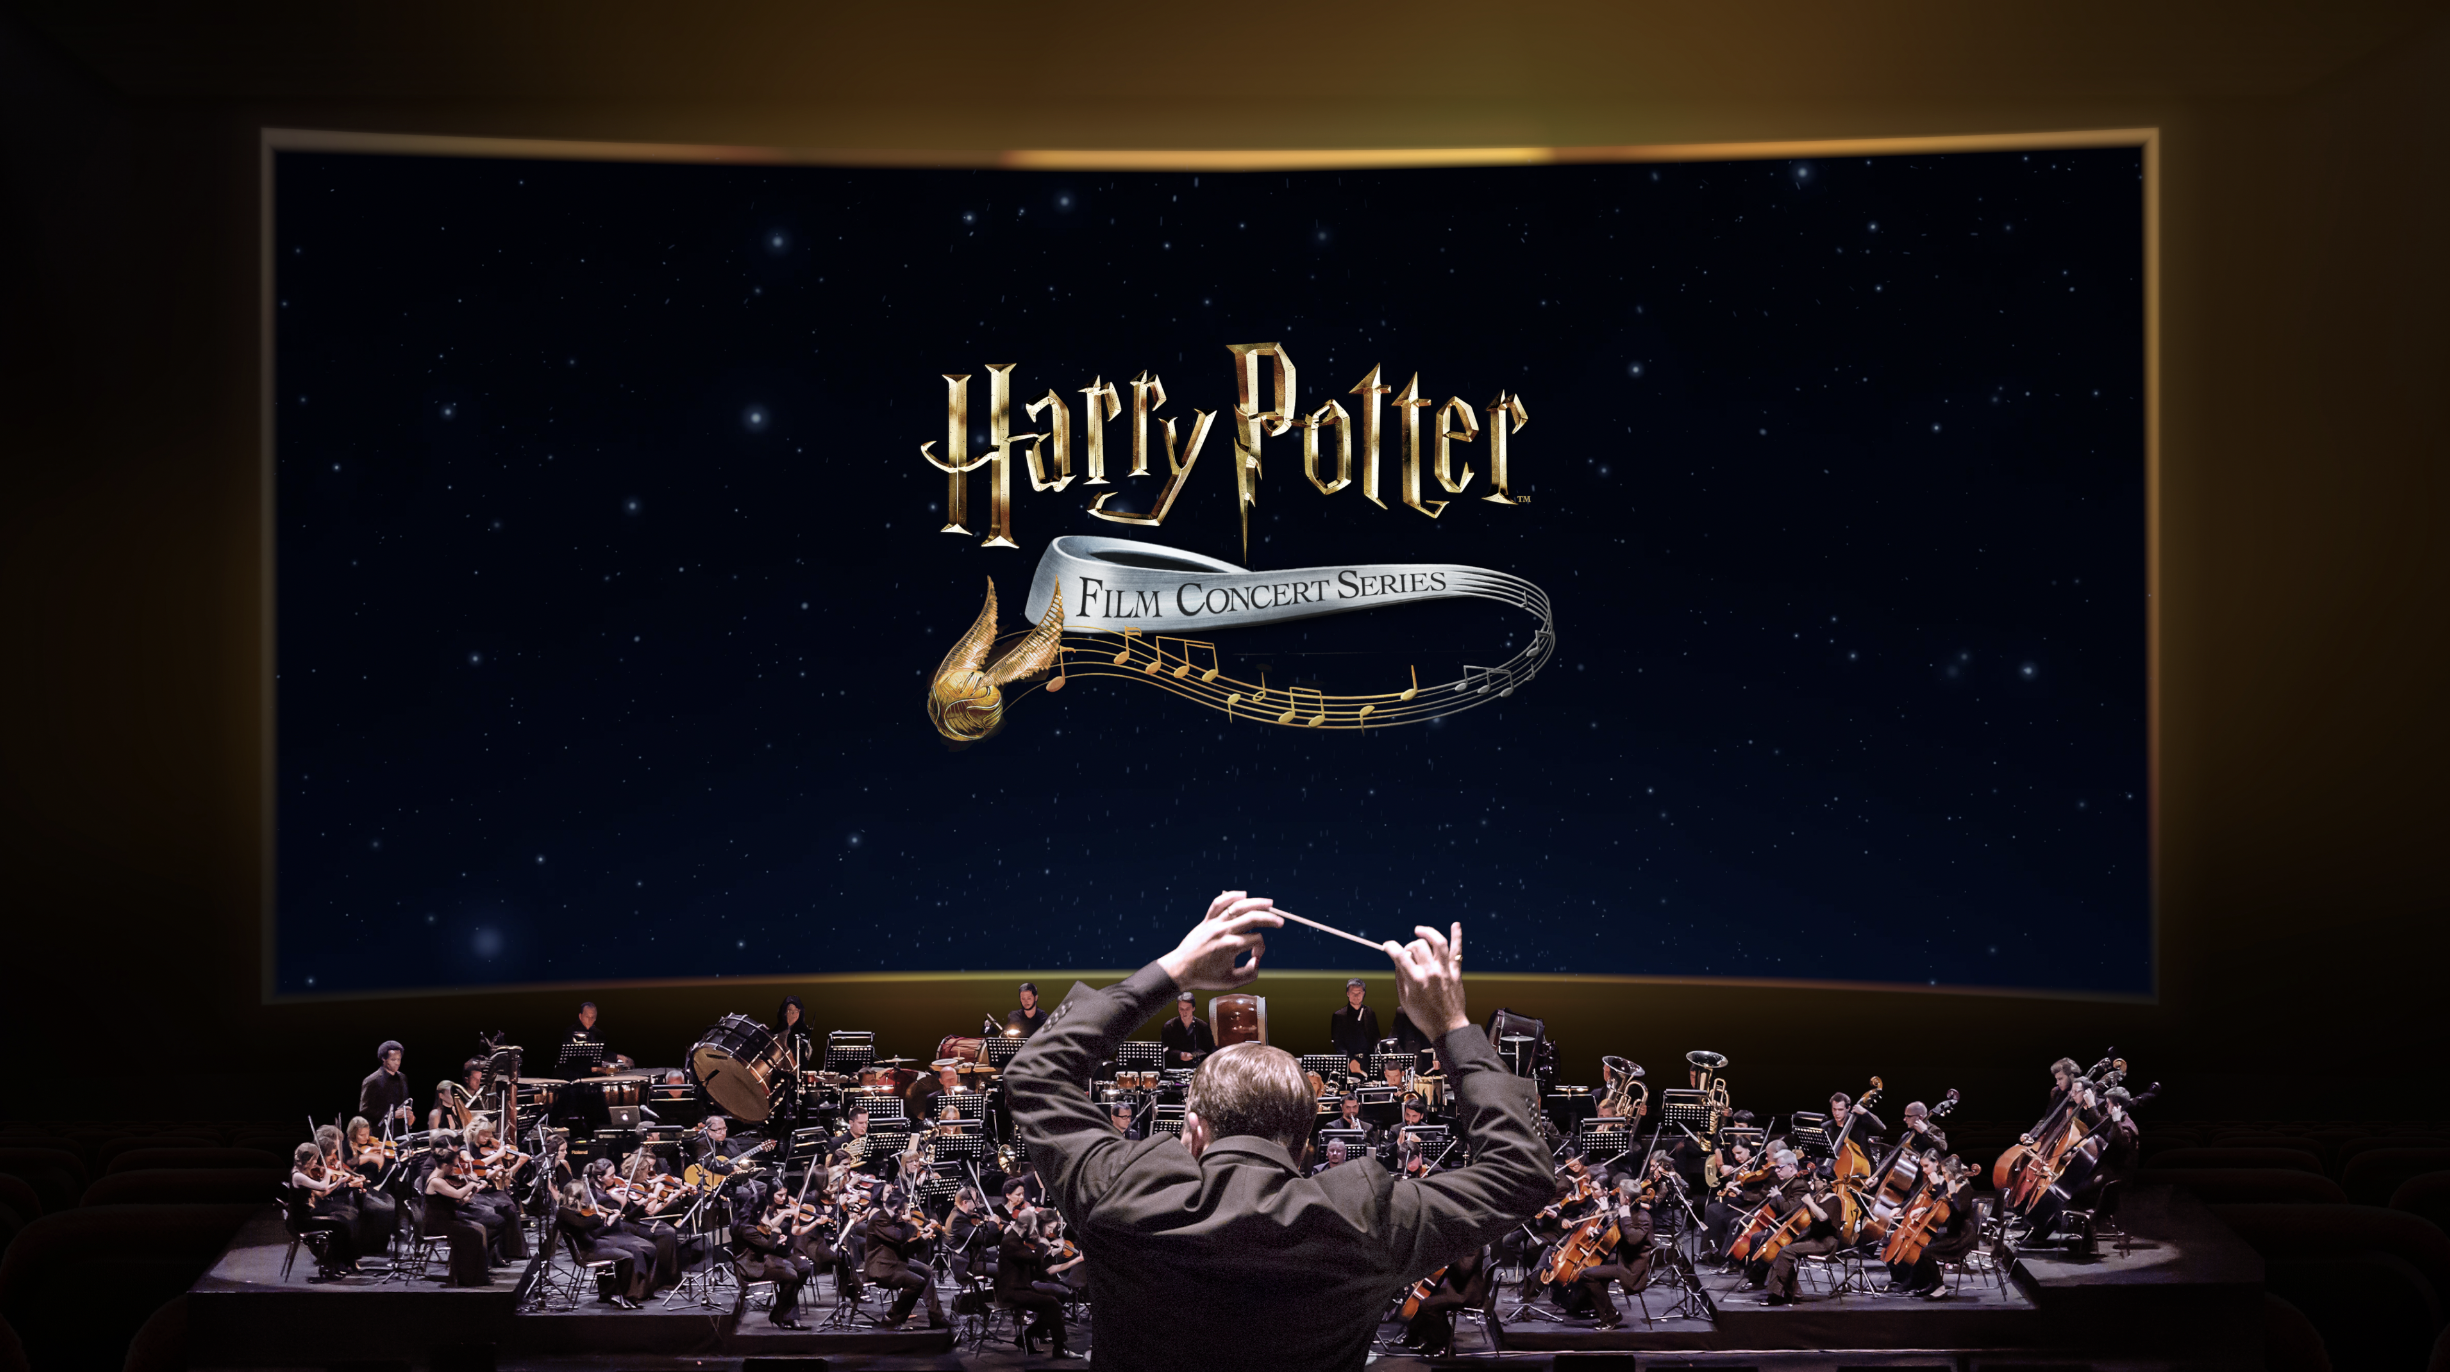 The Harry Potter™ Film Concert Series